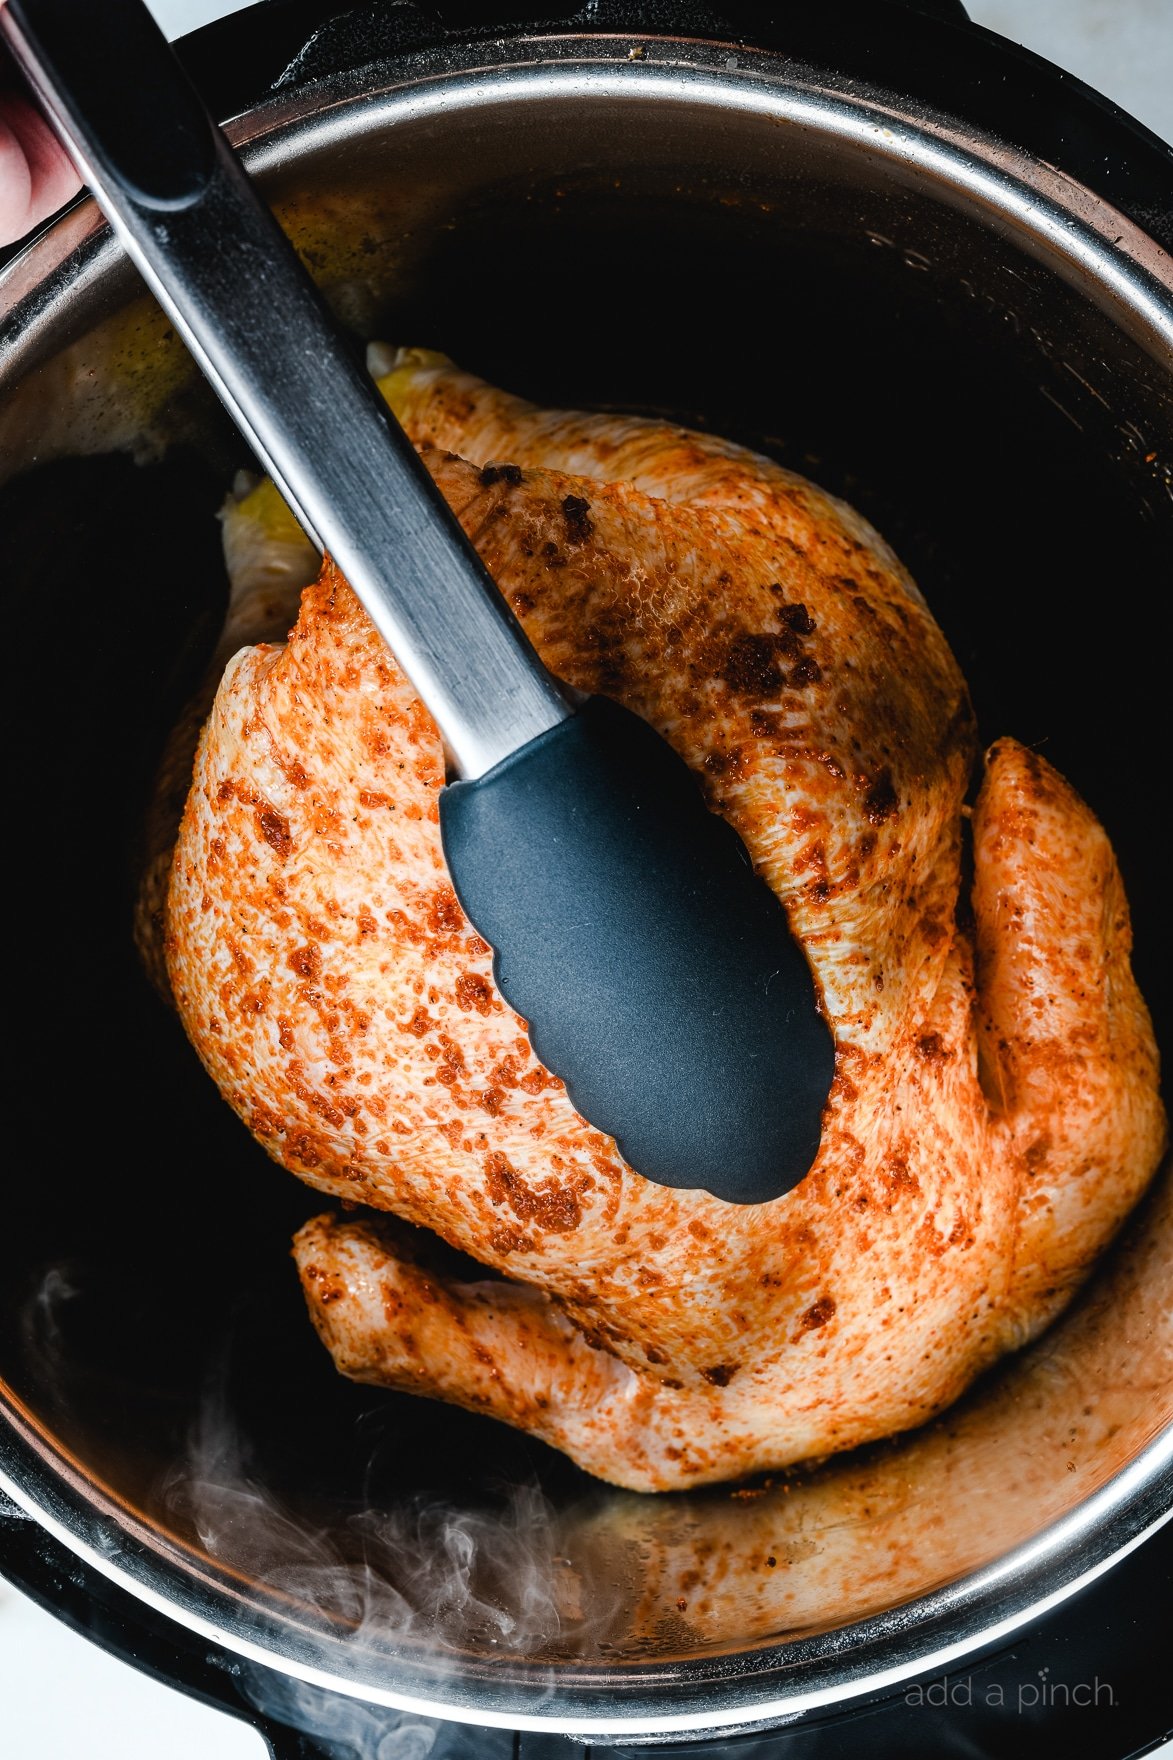 https://addapinch.com/wp-content/uploads/2019/09/instant-pot-rotisserie-chicken-recipe-2380.jpg